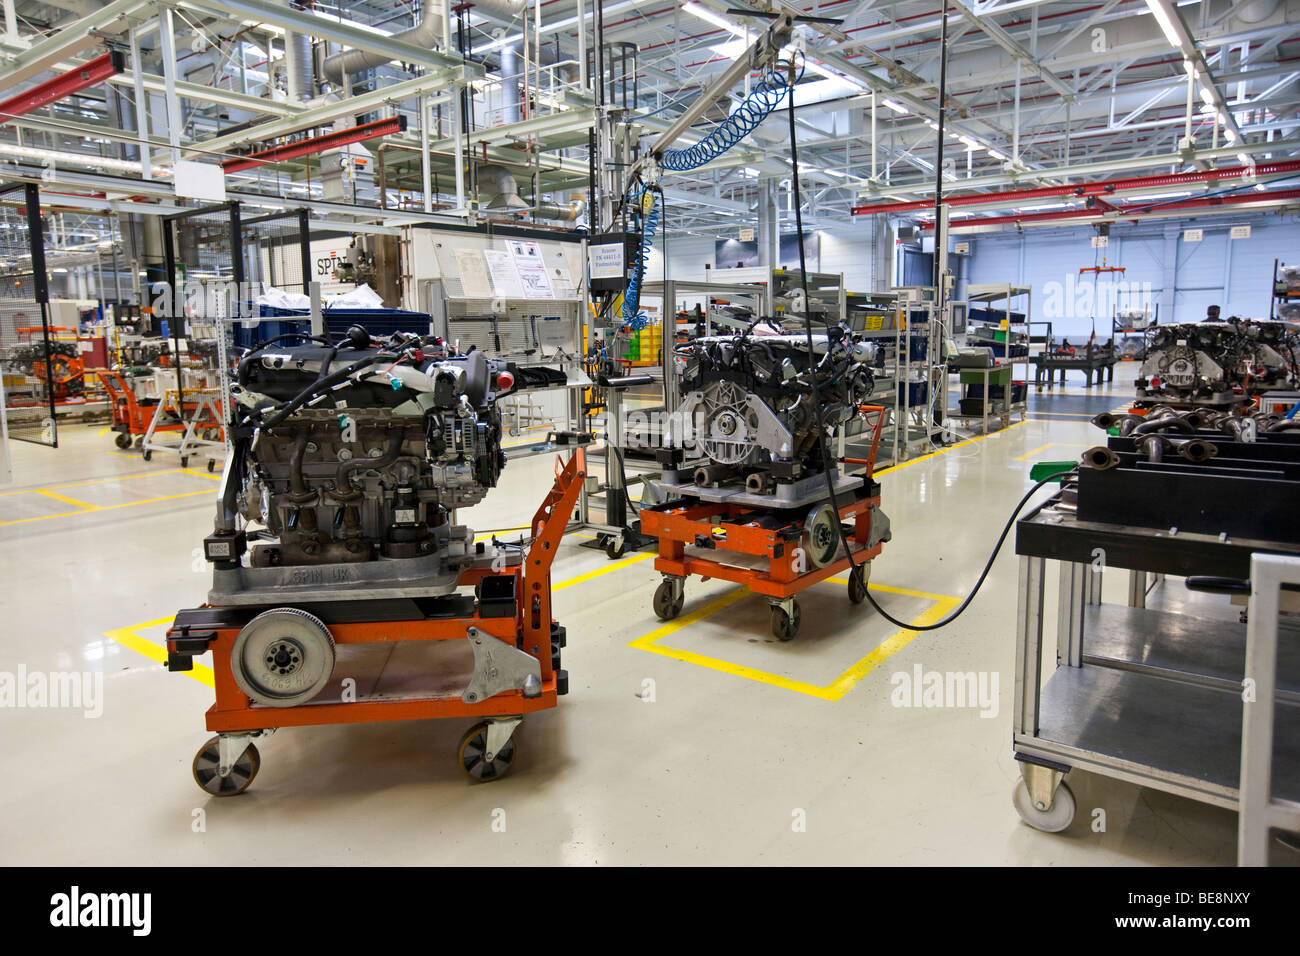 Aston Martin V12 6-liter engine, Aston Martin engine plant in Cologne, Rhineland-Palatinate, Germany, Europe Stock Photo